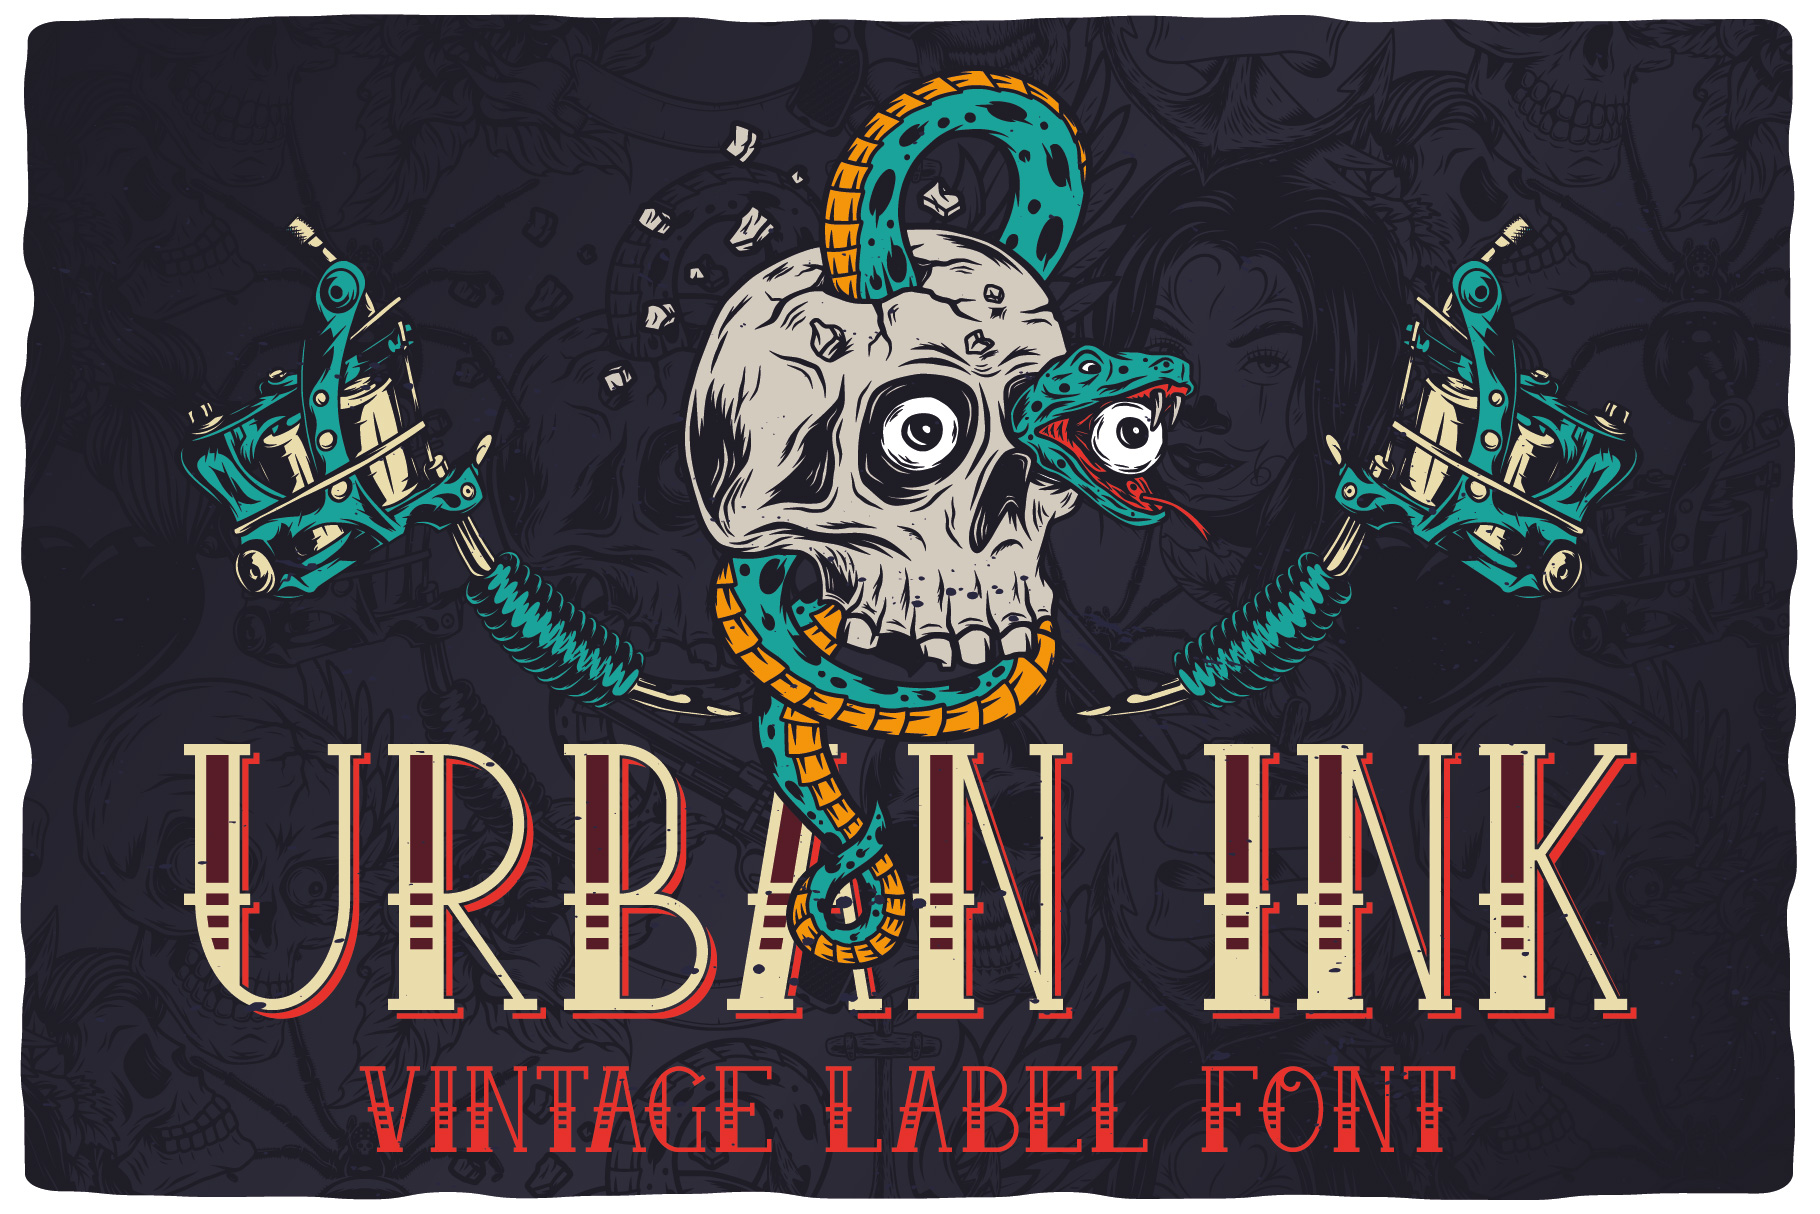 Urbanink label font.